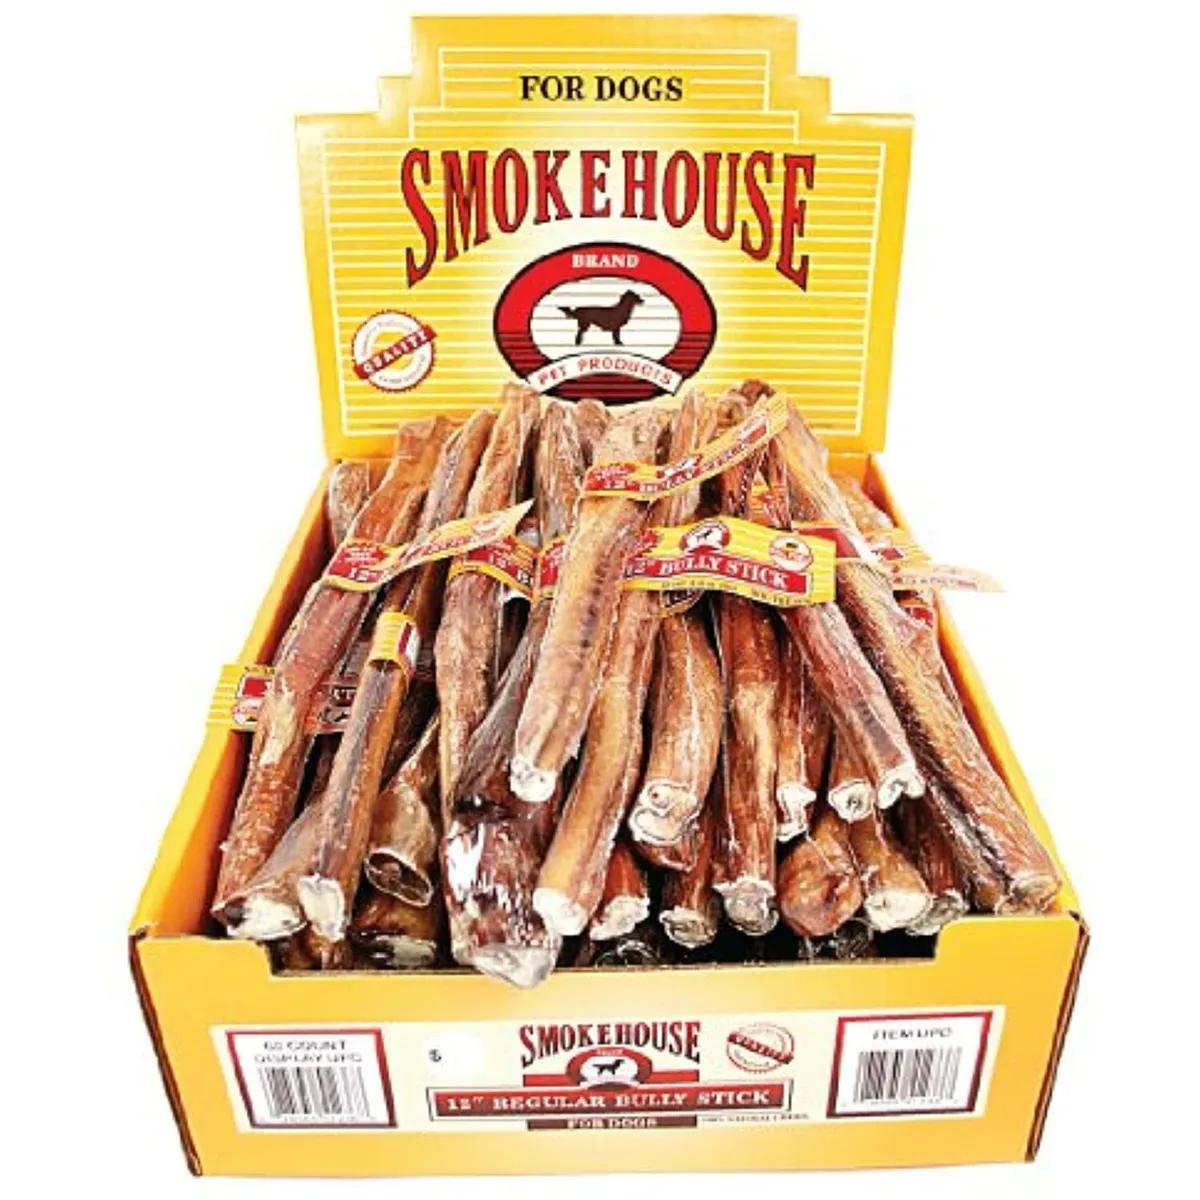 smokehouse bully sticks - Are smoked bully sticks safe for dogs